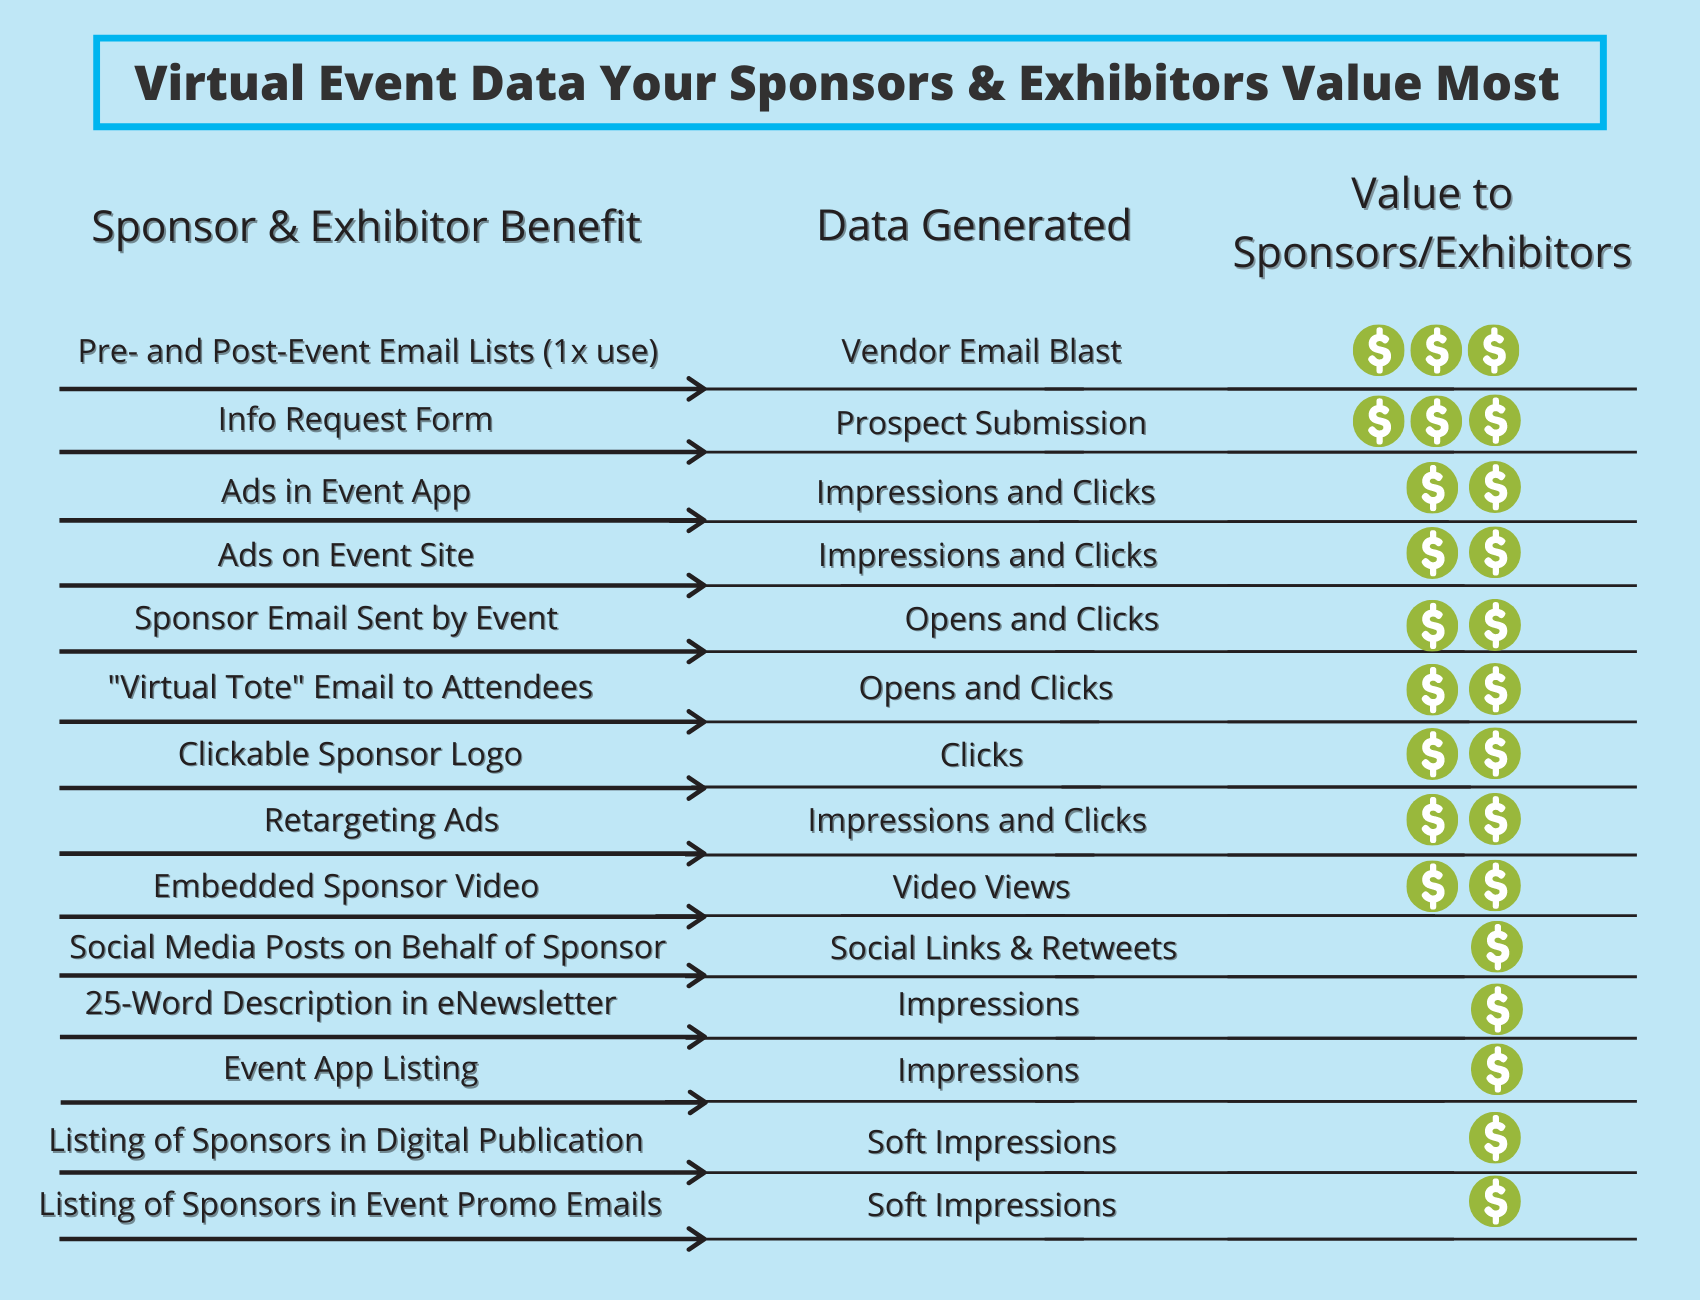 Virtual Event Data - Value to Sponsors & Exhibitors